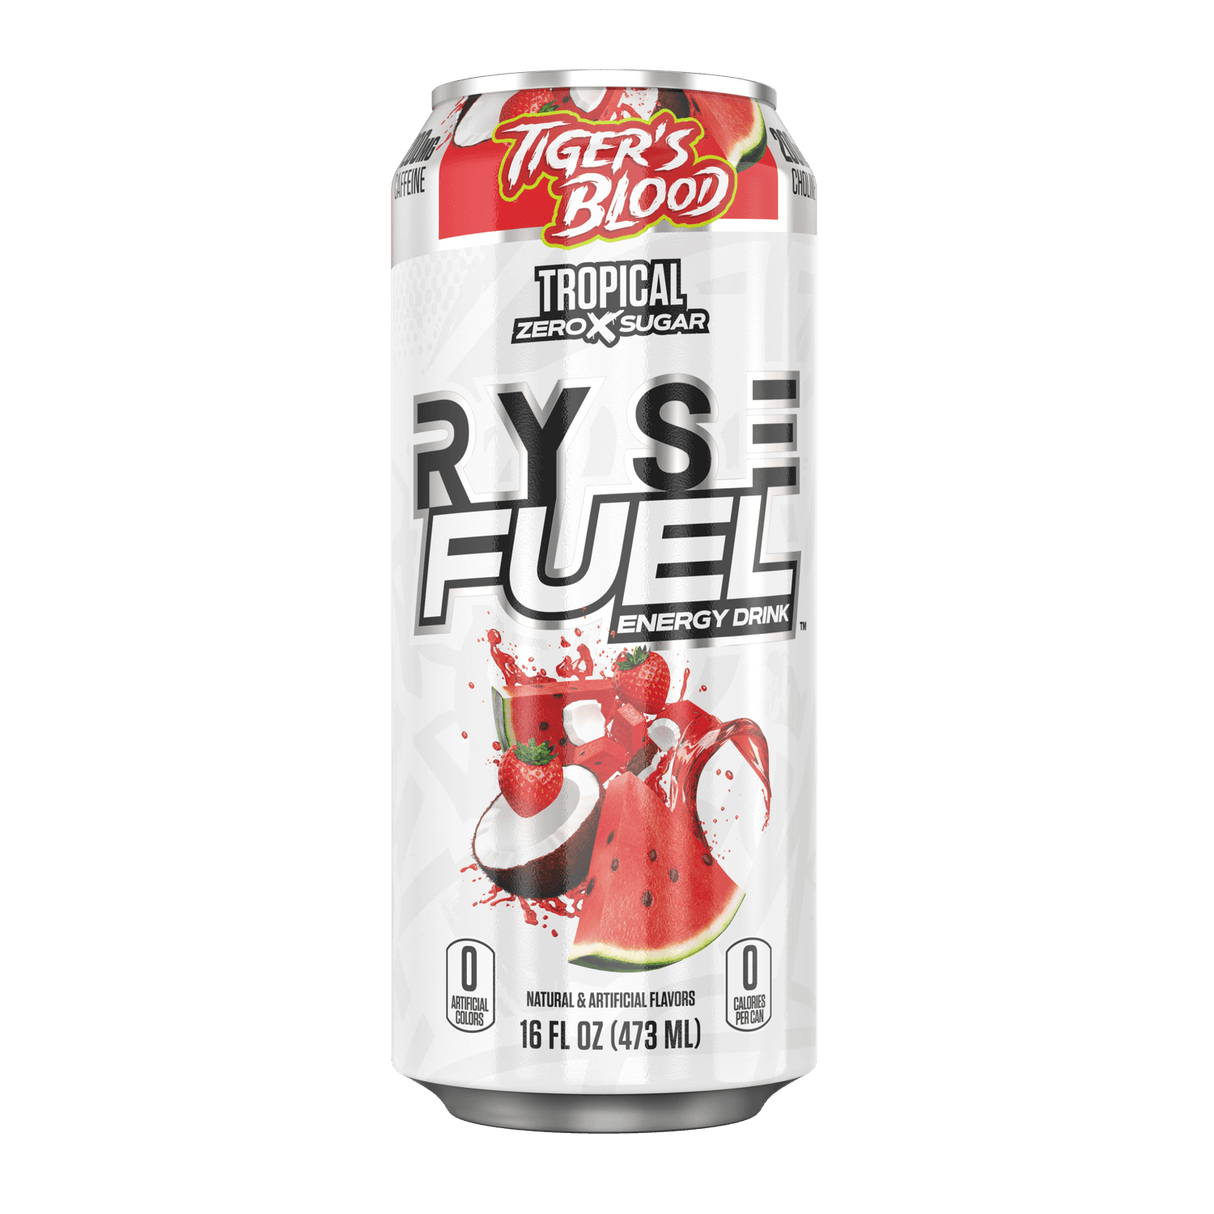 RYSE fuel energy drink - RYSE - Prime Sports Nutrition